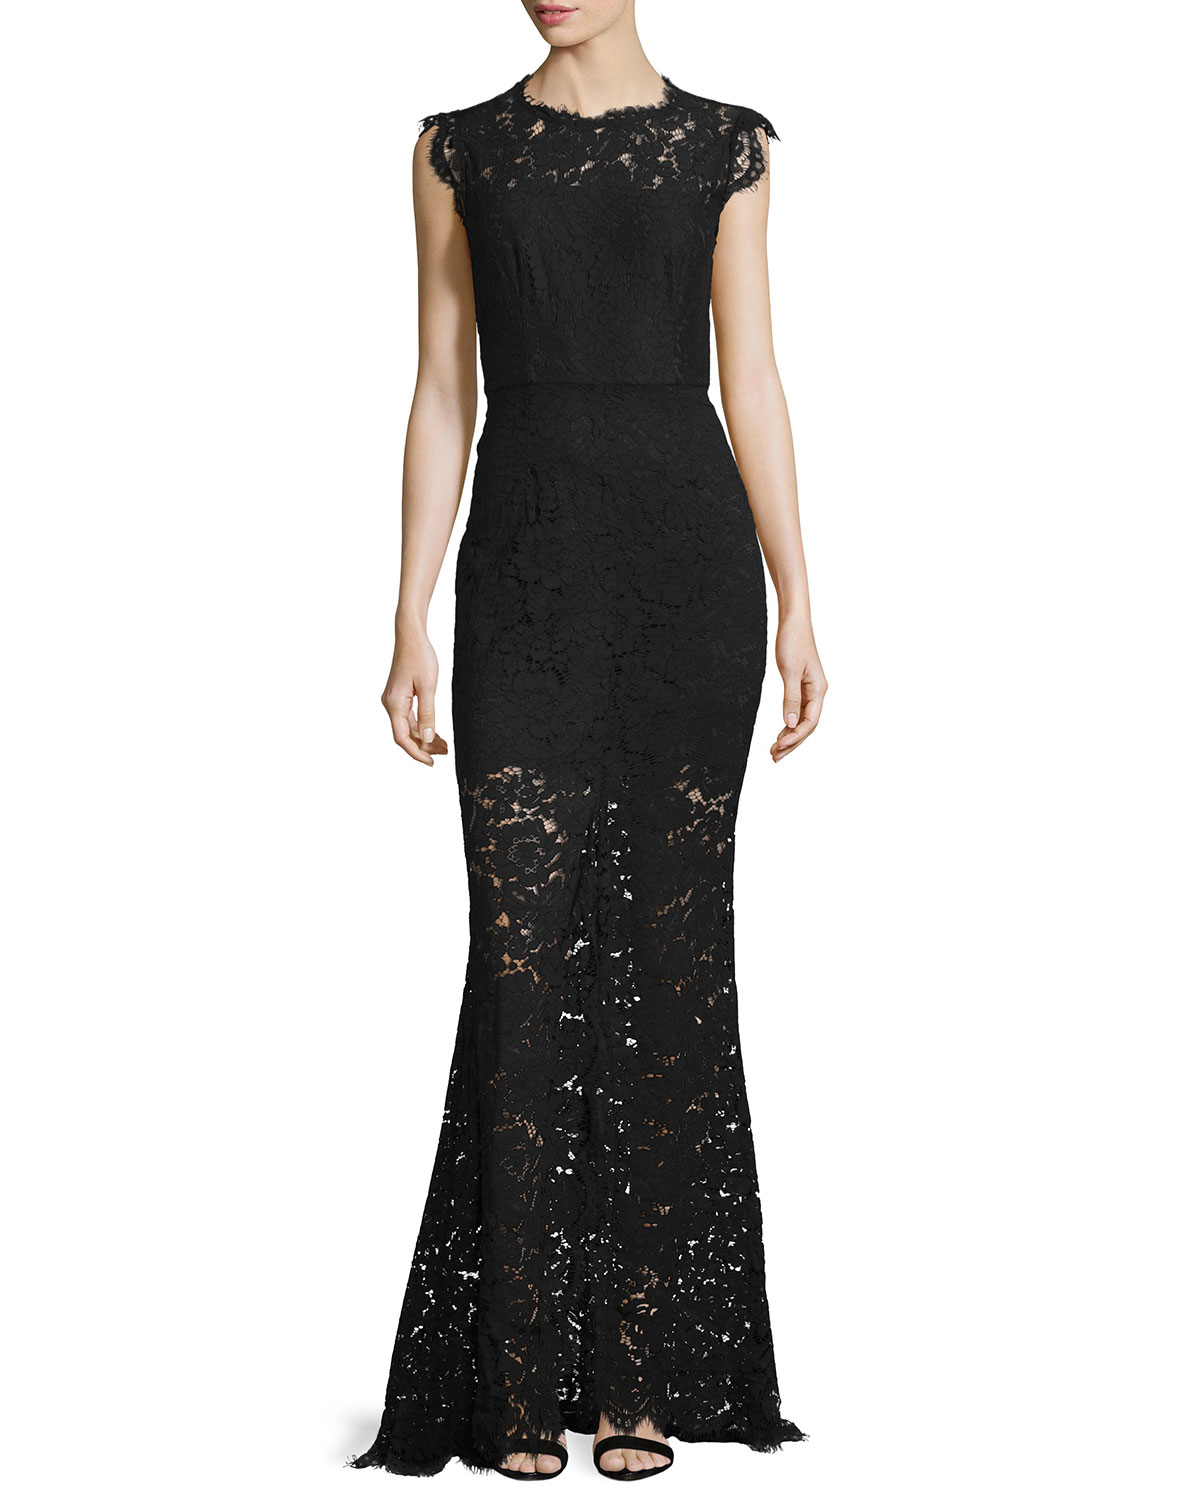 Lyst - Rachel Zoe Estelle Cutout Lace Maxi Dress in Black